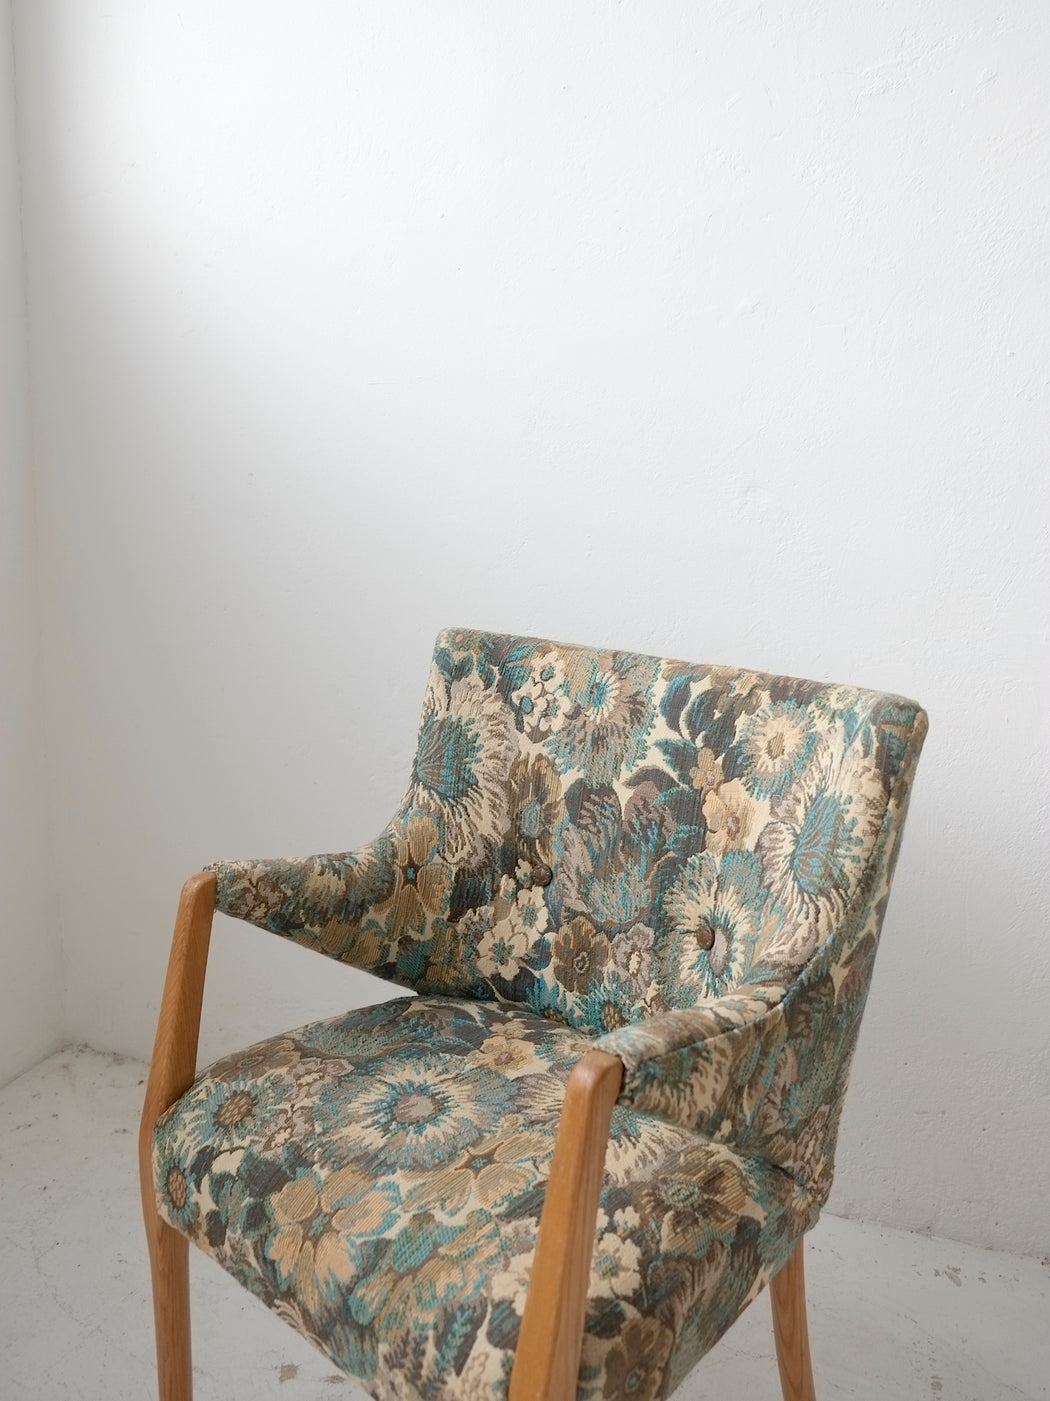 Danish Side Chair